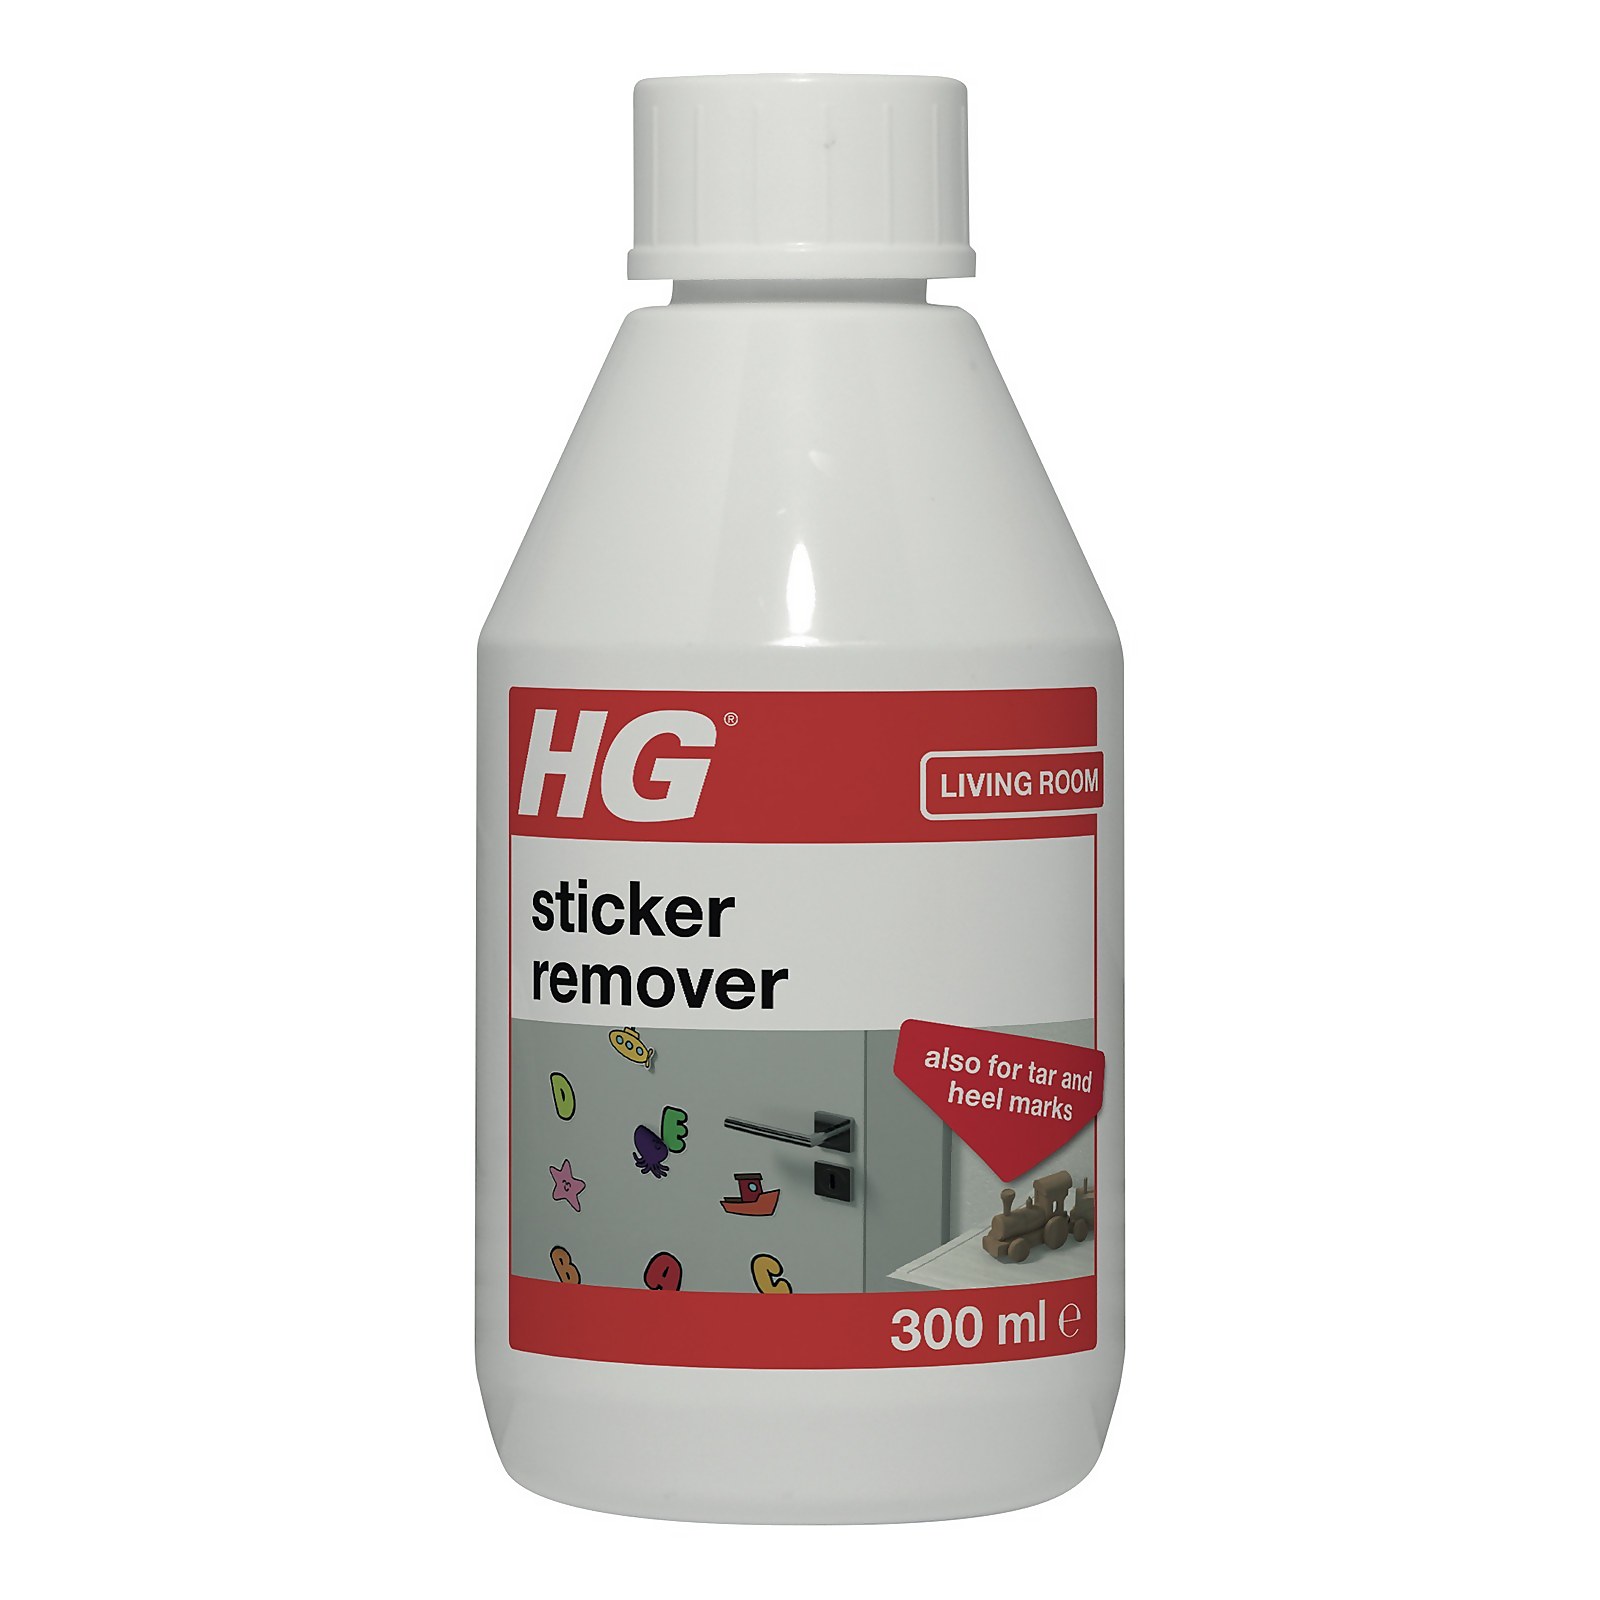 Photo of Hg Sticker Remover - 300ml